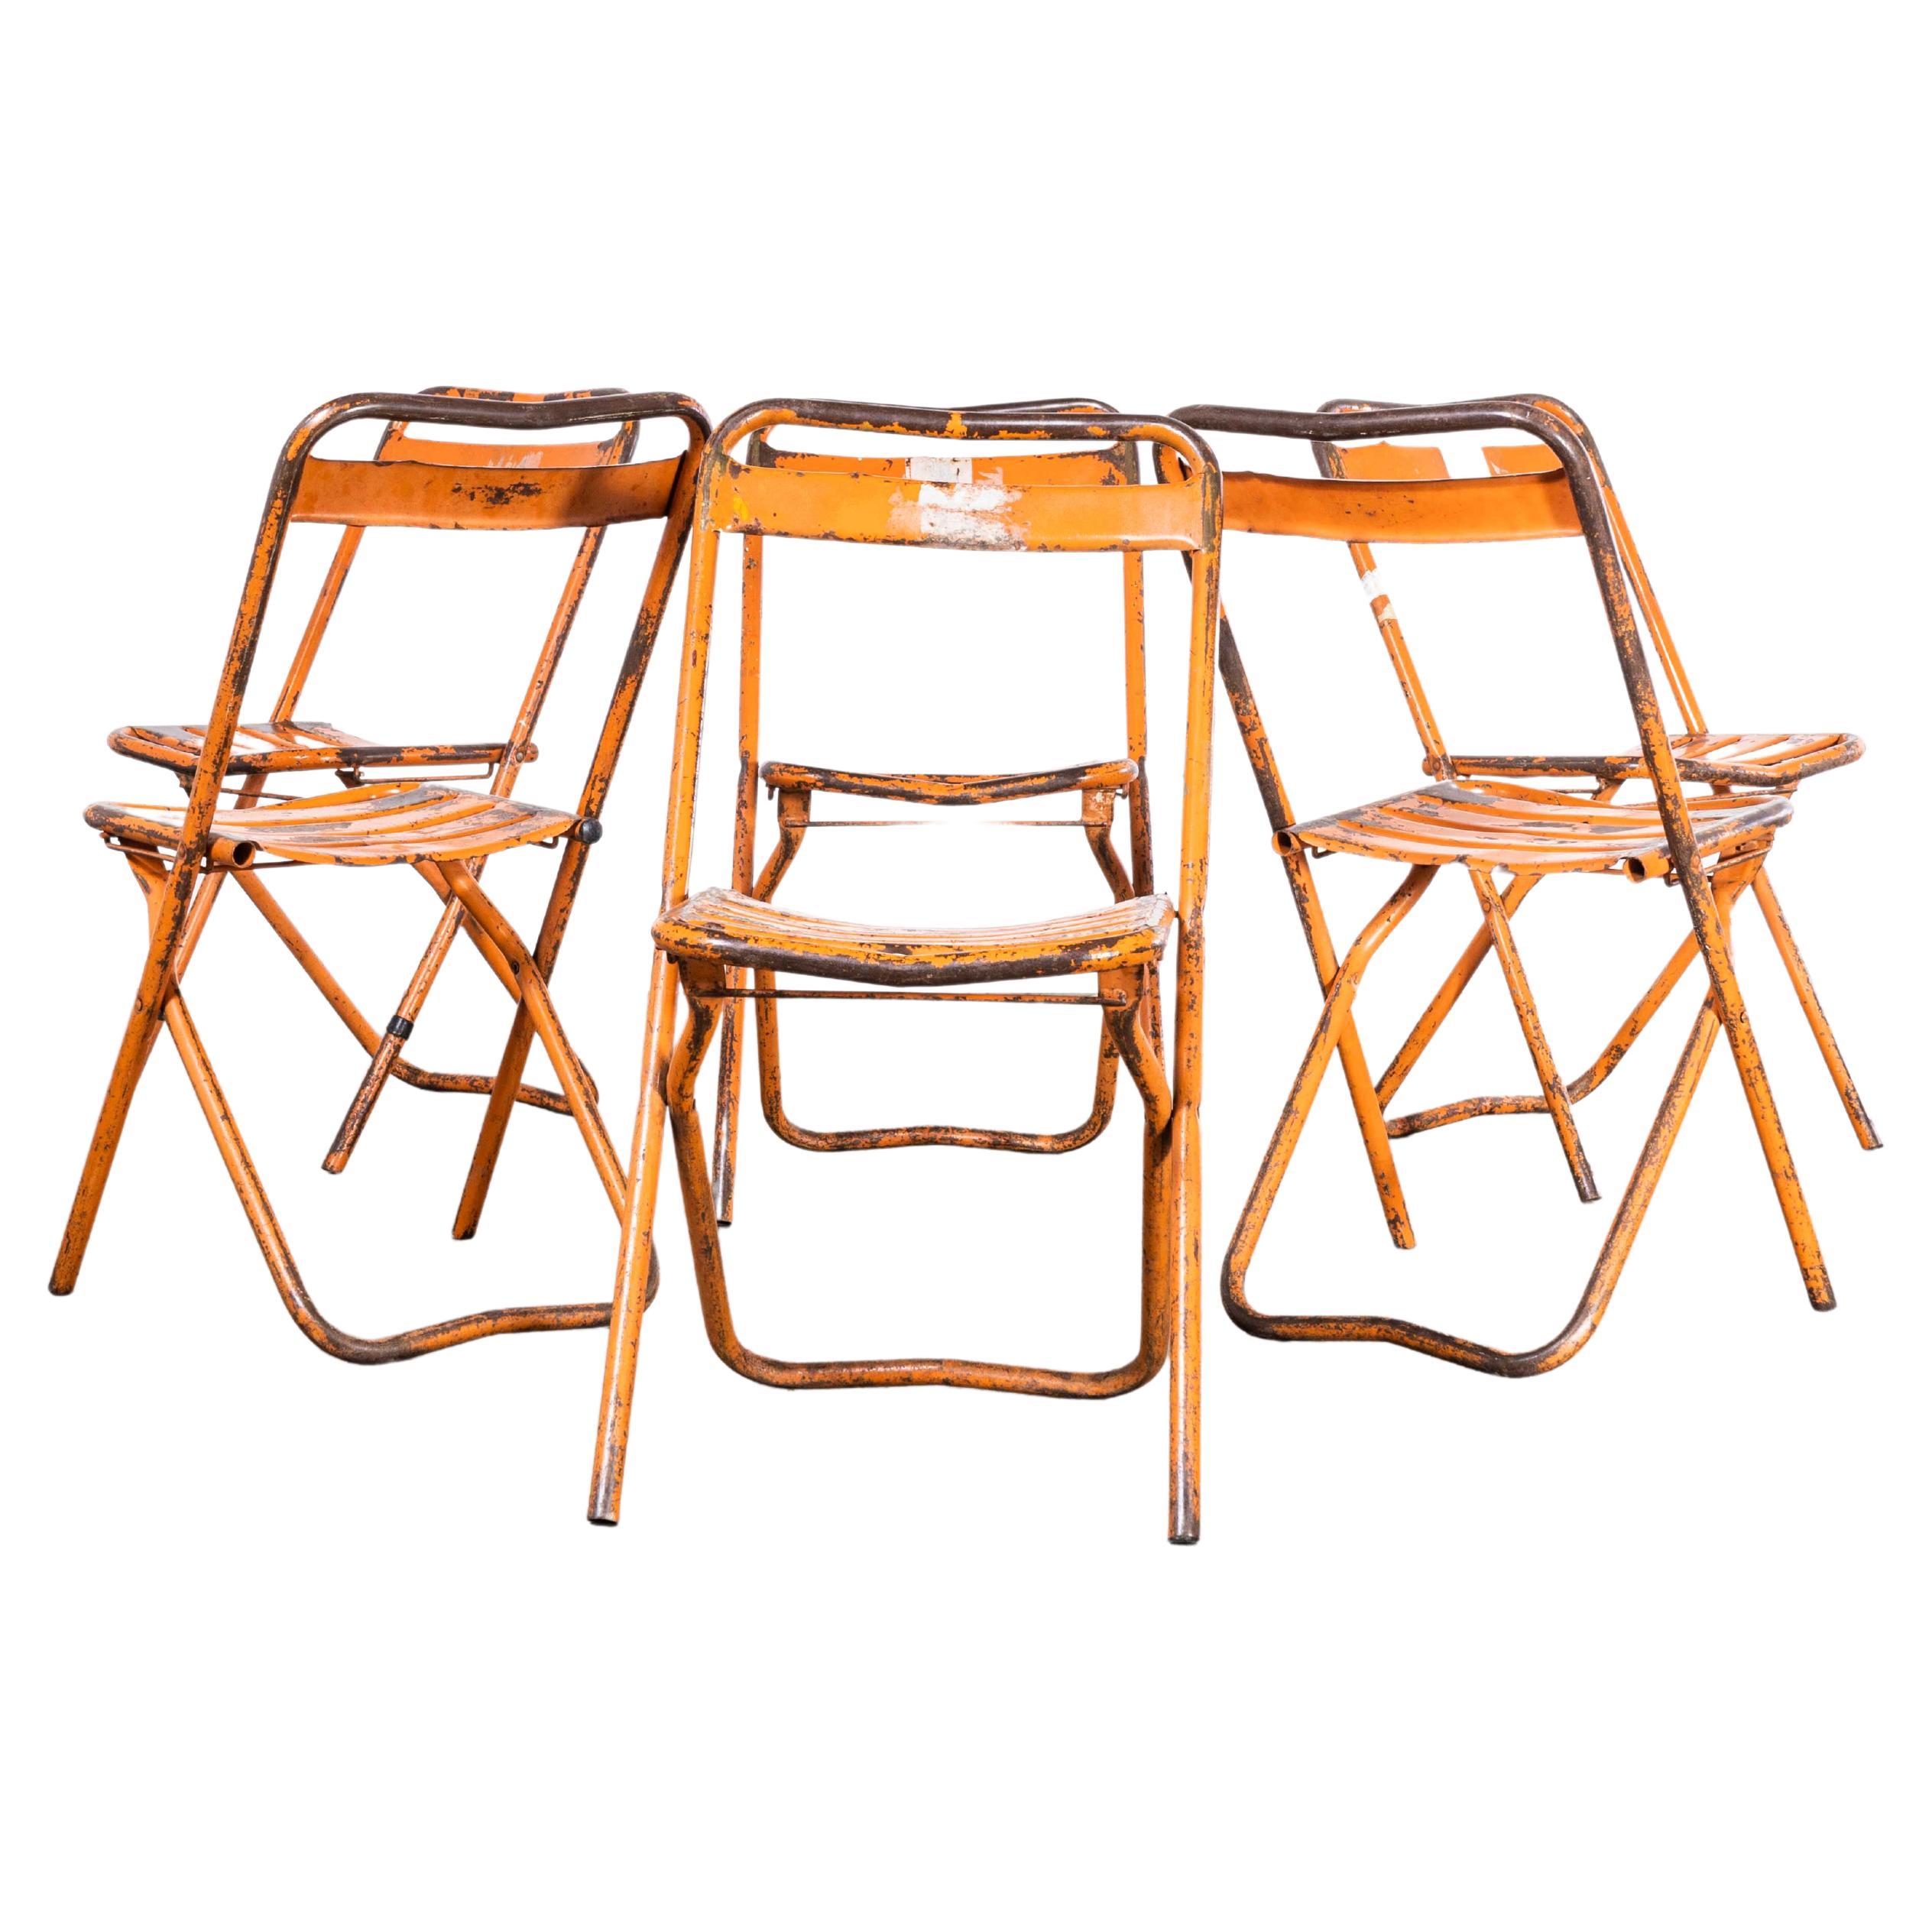 Original 1950's Orange Tolix Folding Metal Outdoor Chairs - Set Of Six